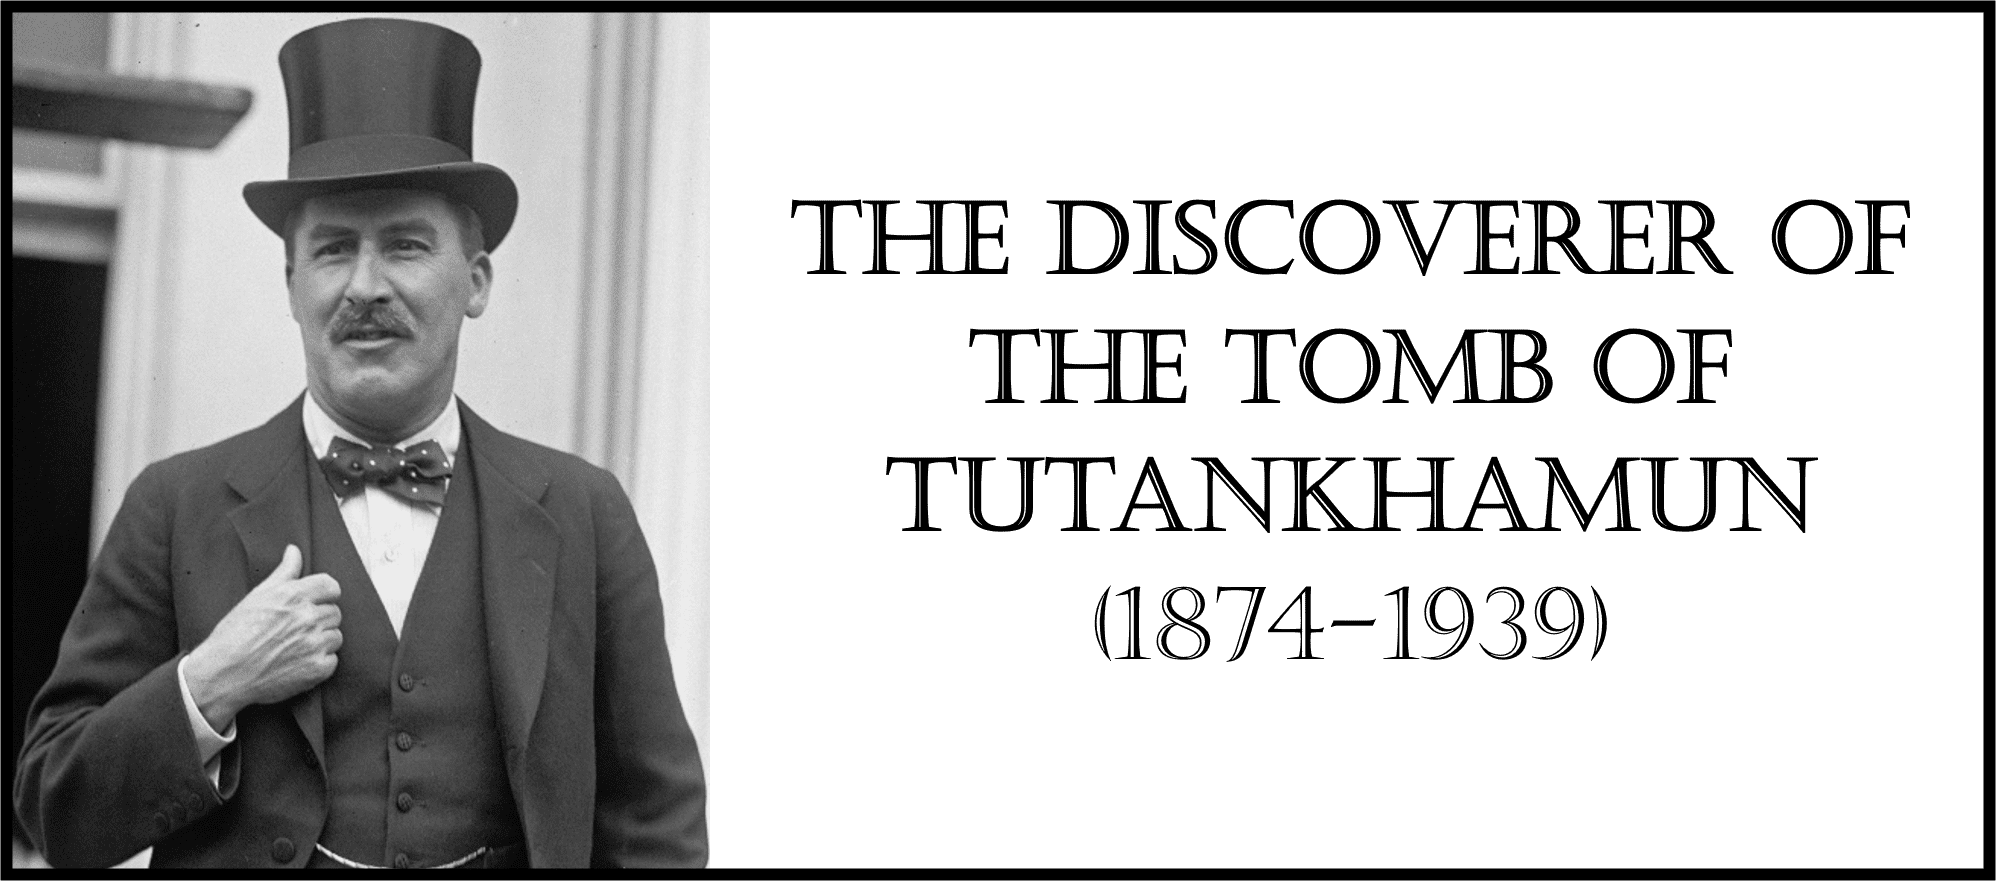 The discoverer of Tutankhamun's tomb